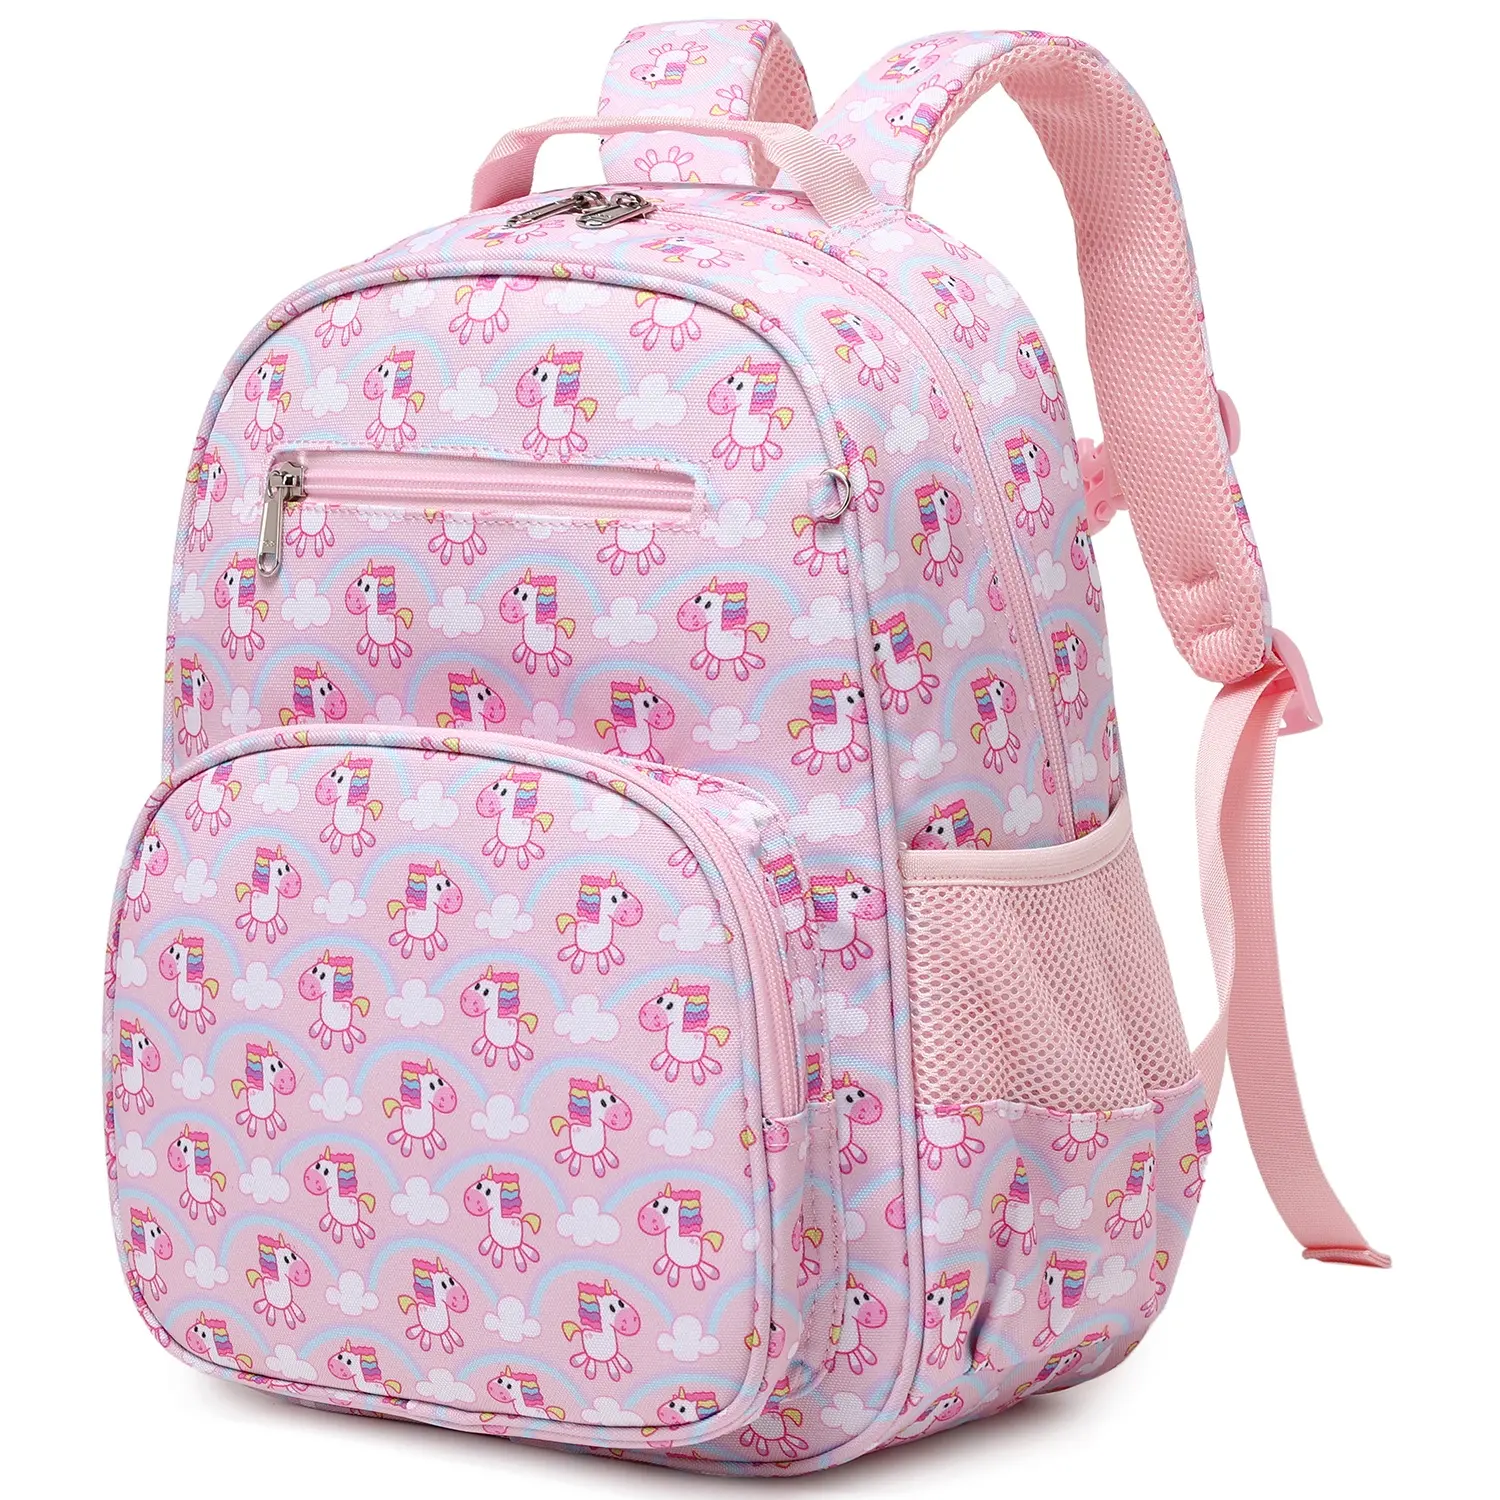 High quality school bags small backpack little girls bags school unicorn backpack school bags girls kids cartoon backpacks